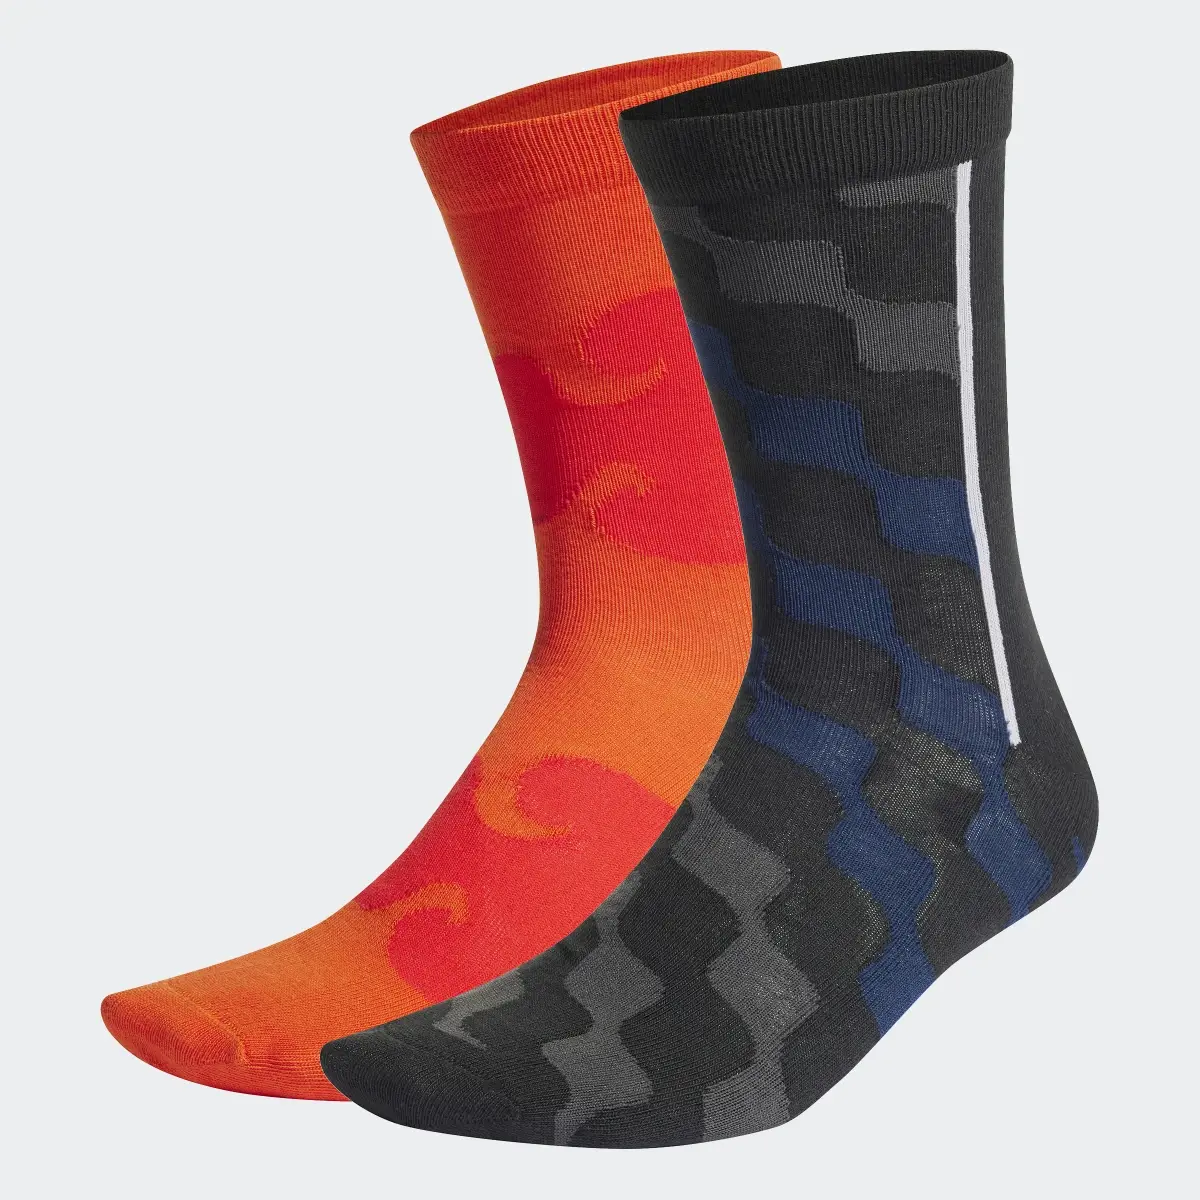 Adidas Marimekko Socken, 2 Paar. 1